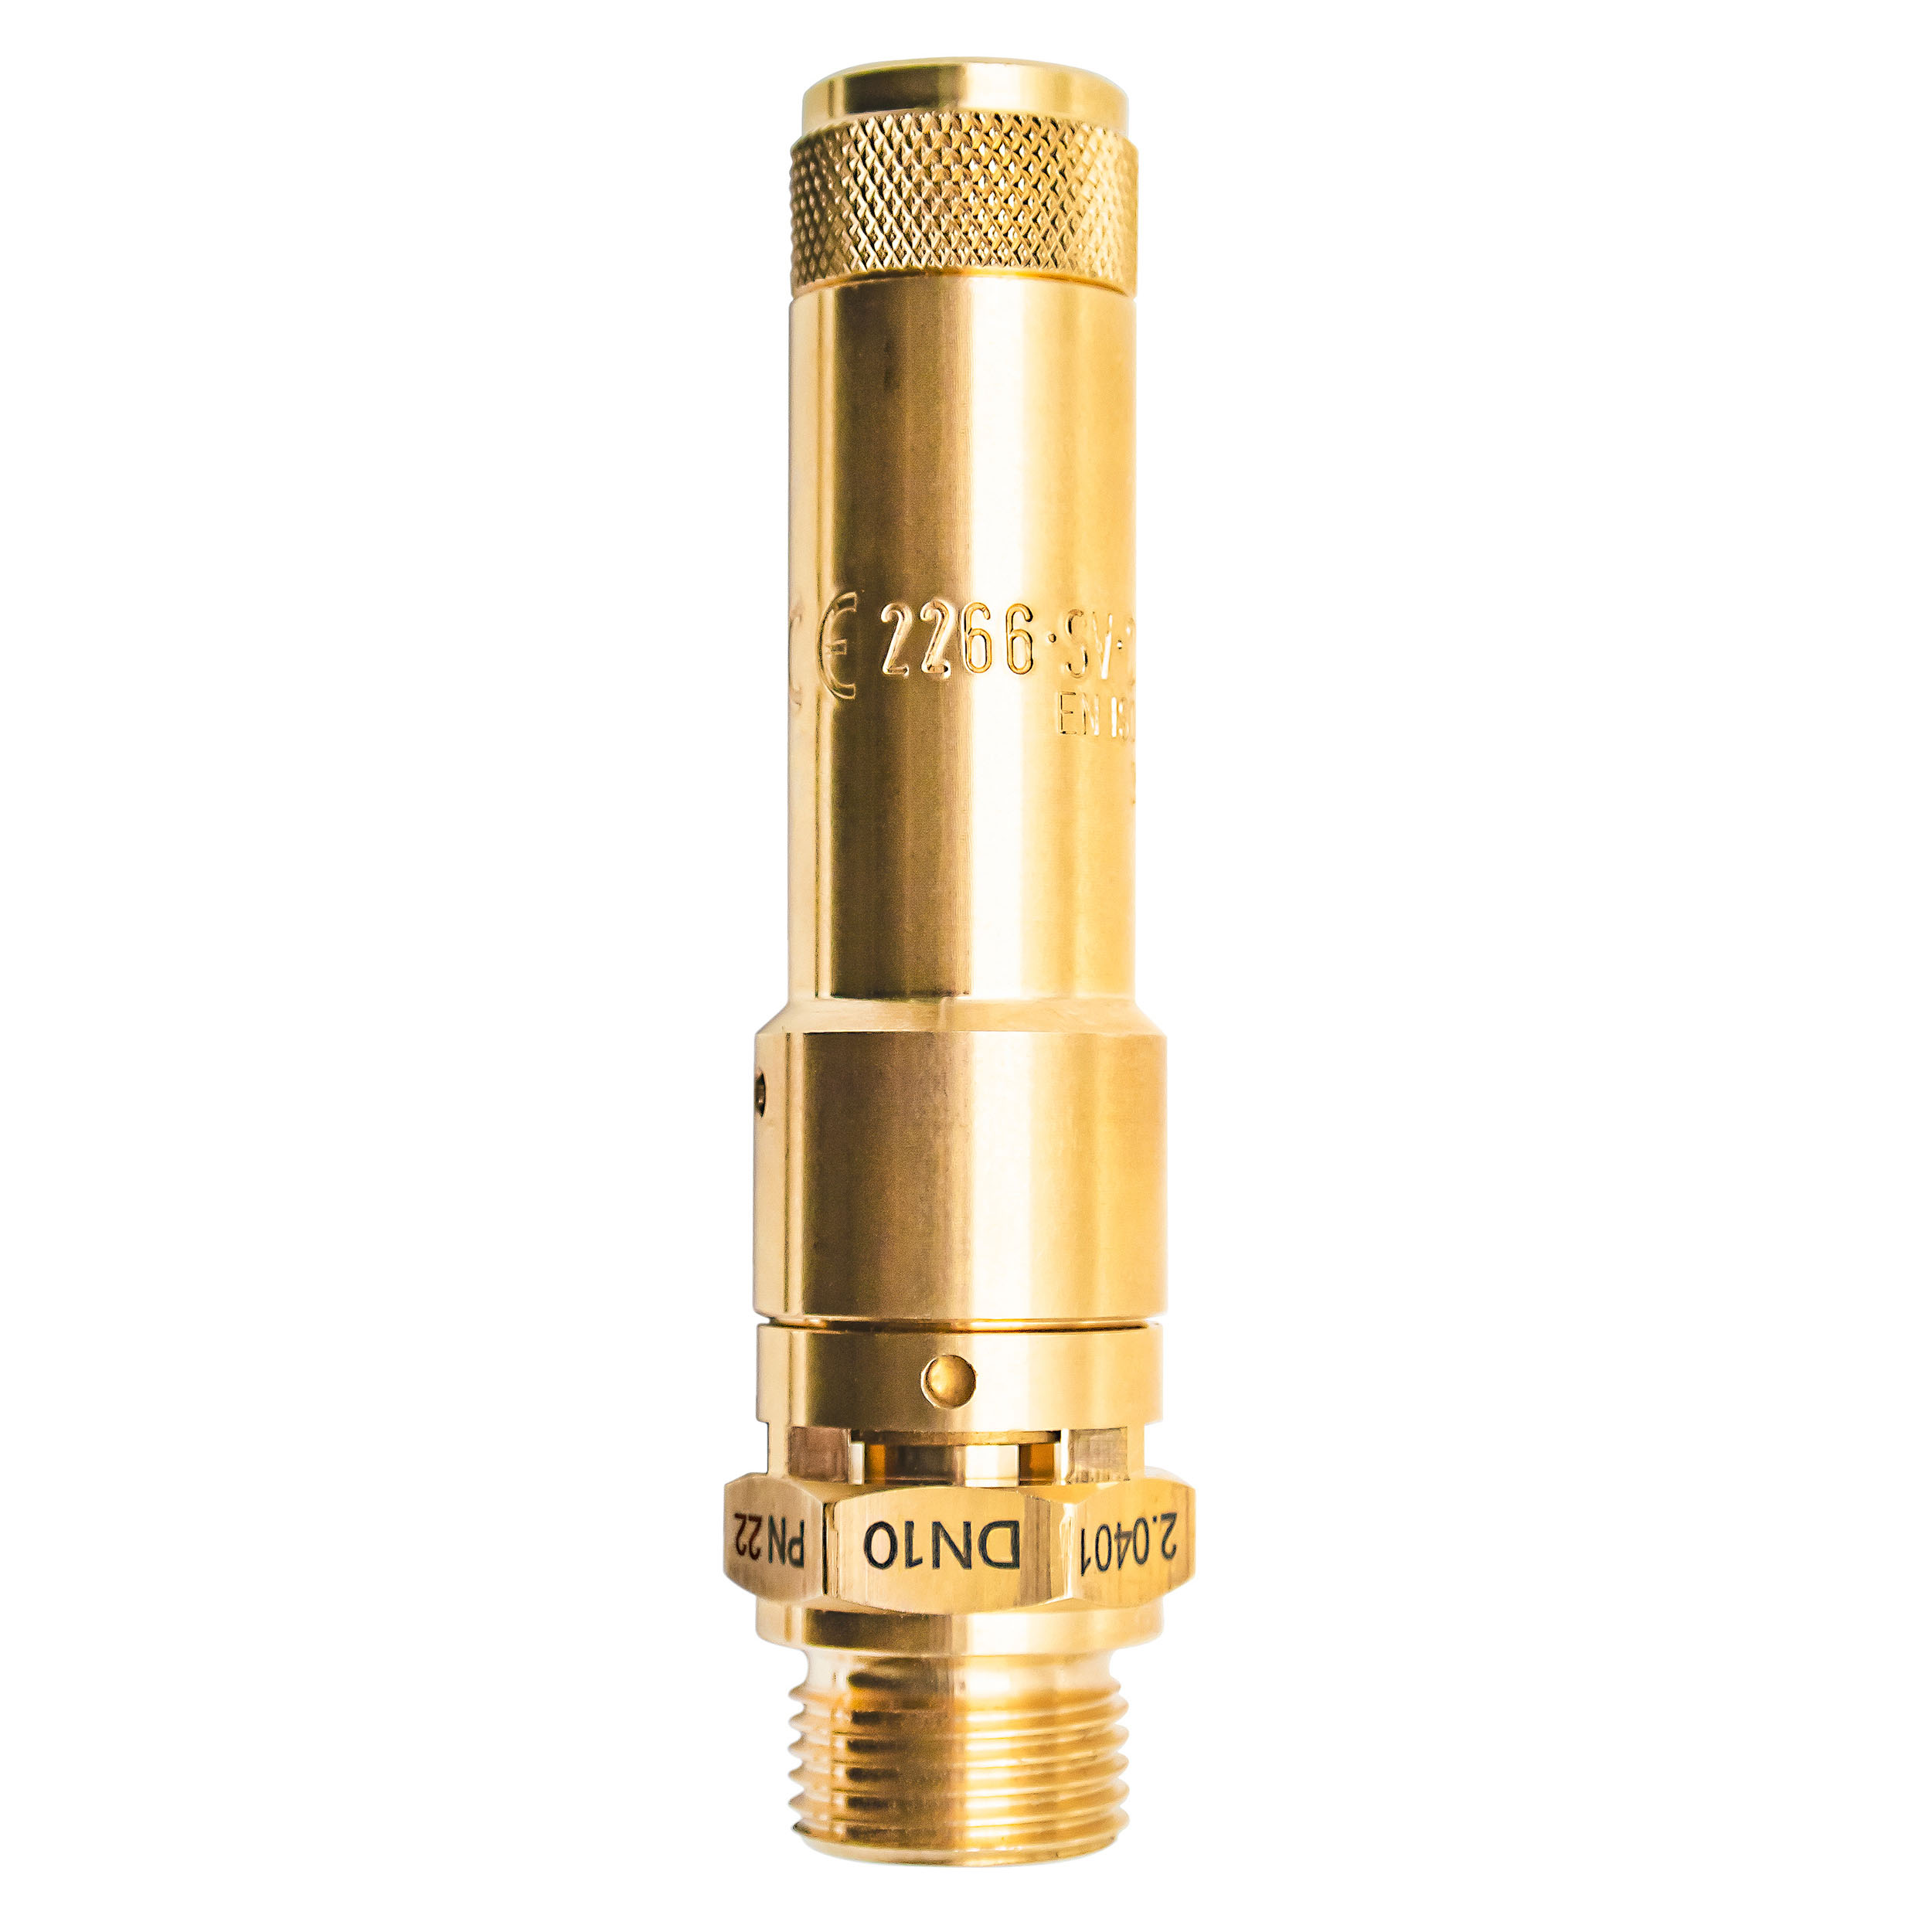 Component-tested safety valve DN 10, G½, pressure: 5.1-7 bar